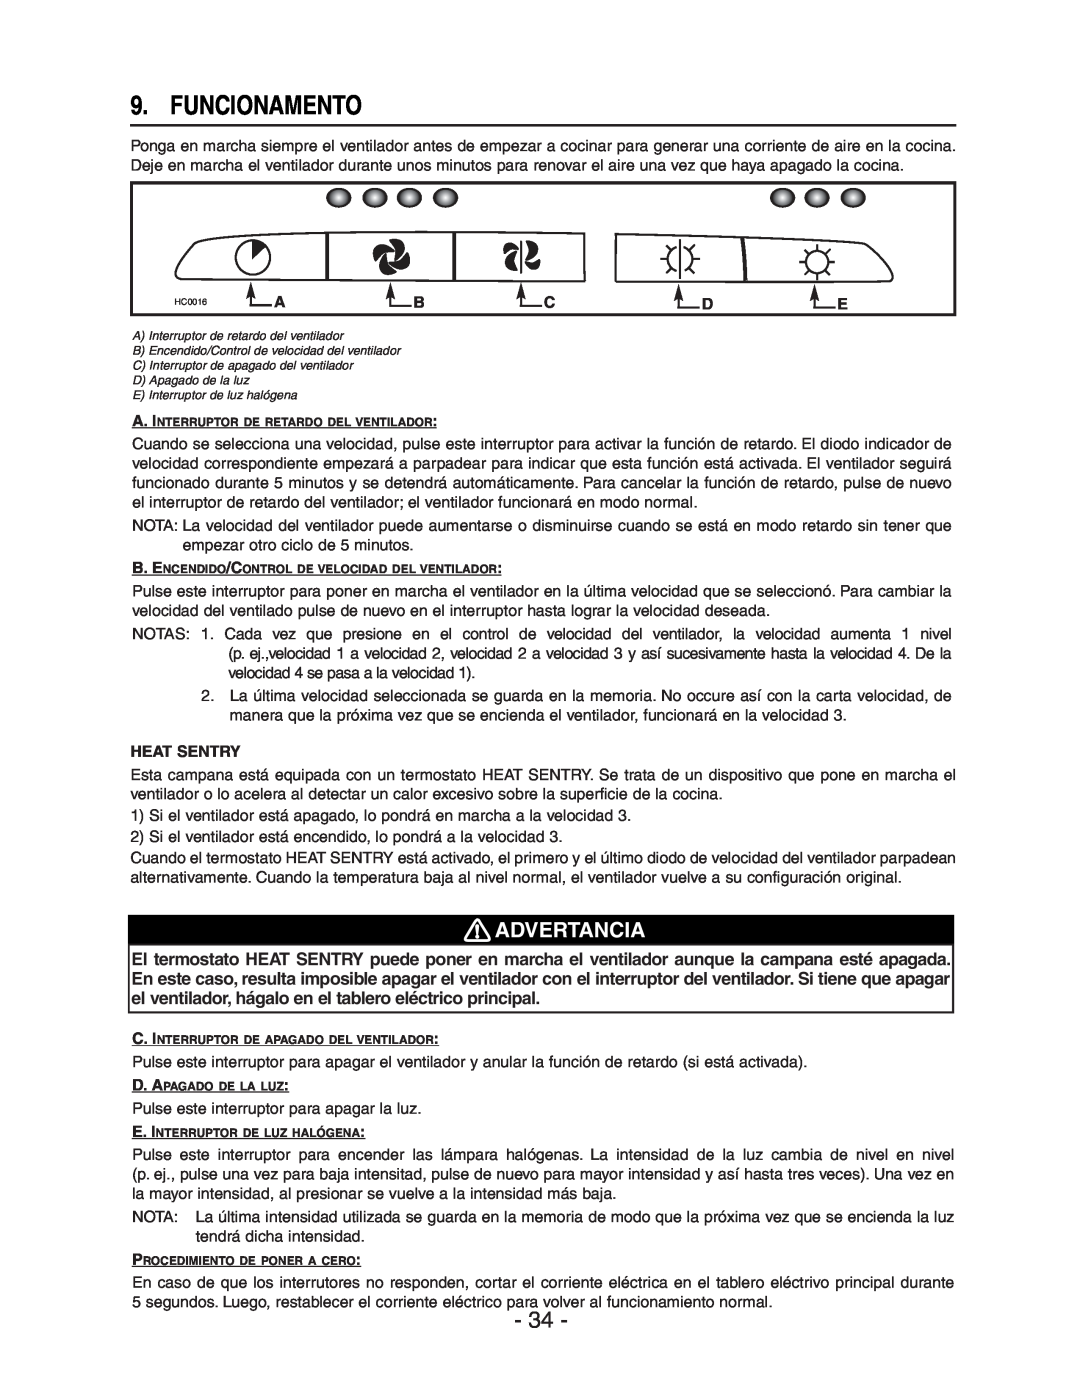 Broan E661 manual Funcionamento, Advertancia, Heat Sentry 